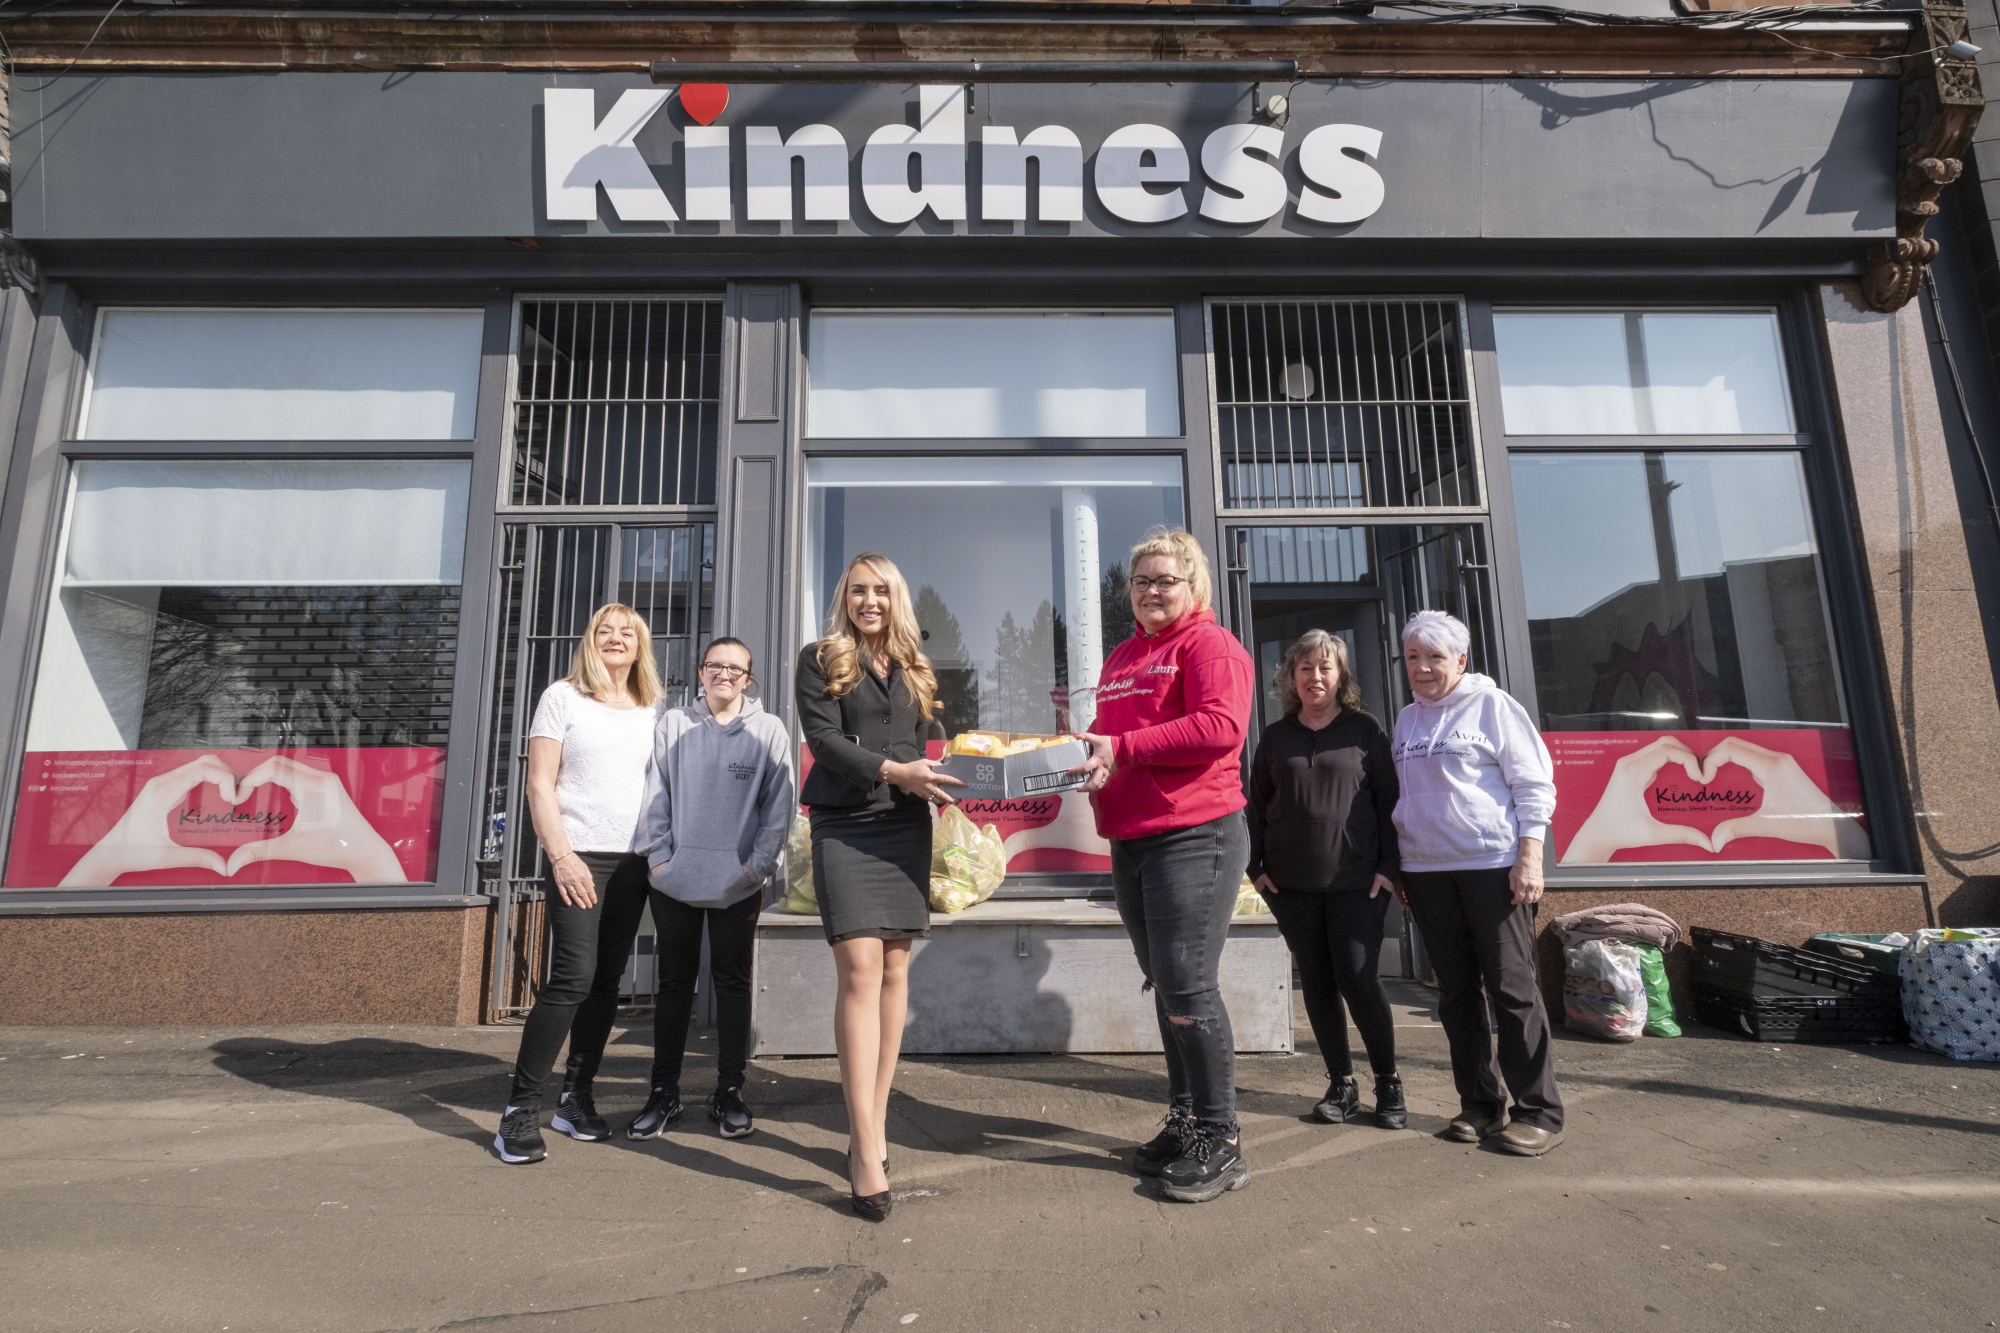 Cala hands £1,500 boost to Kindness Homeless Street Team